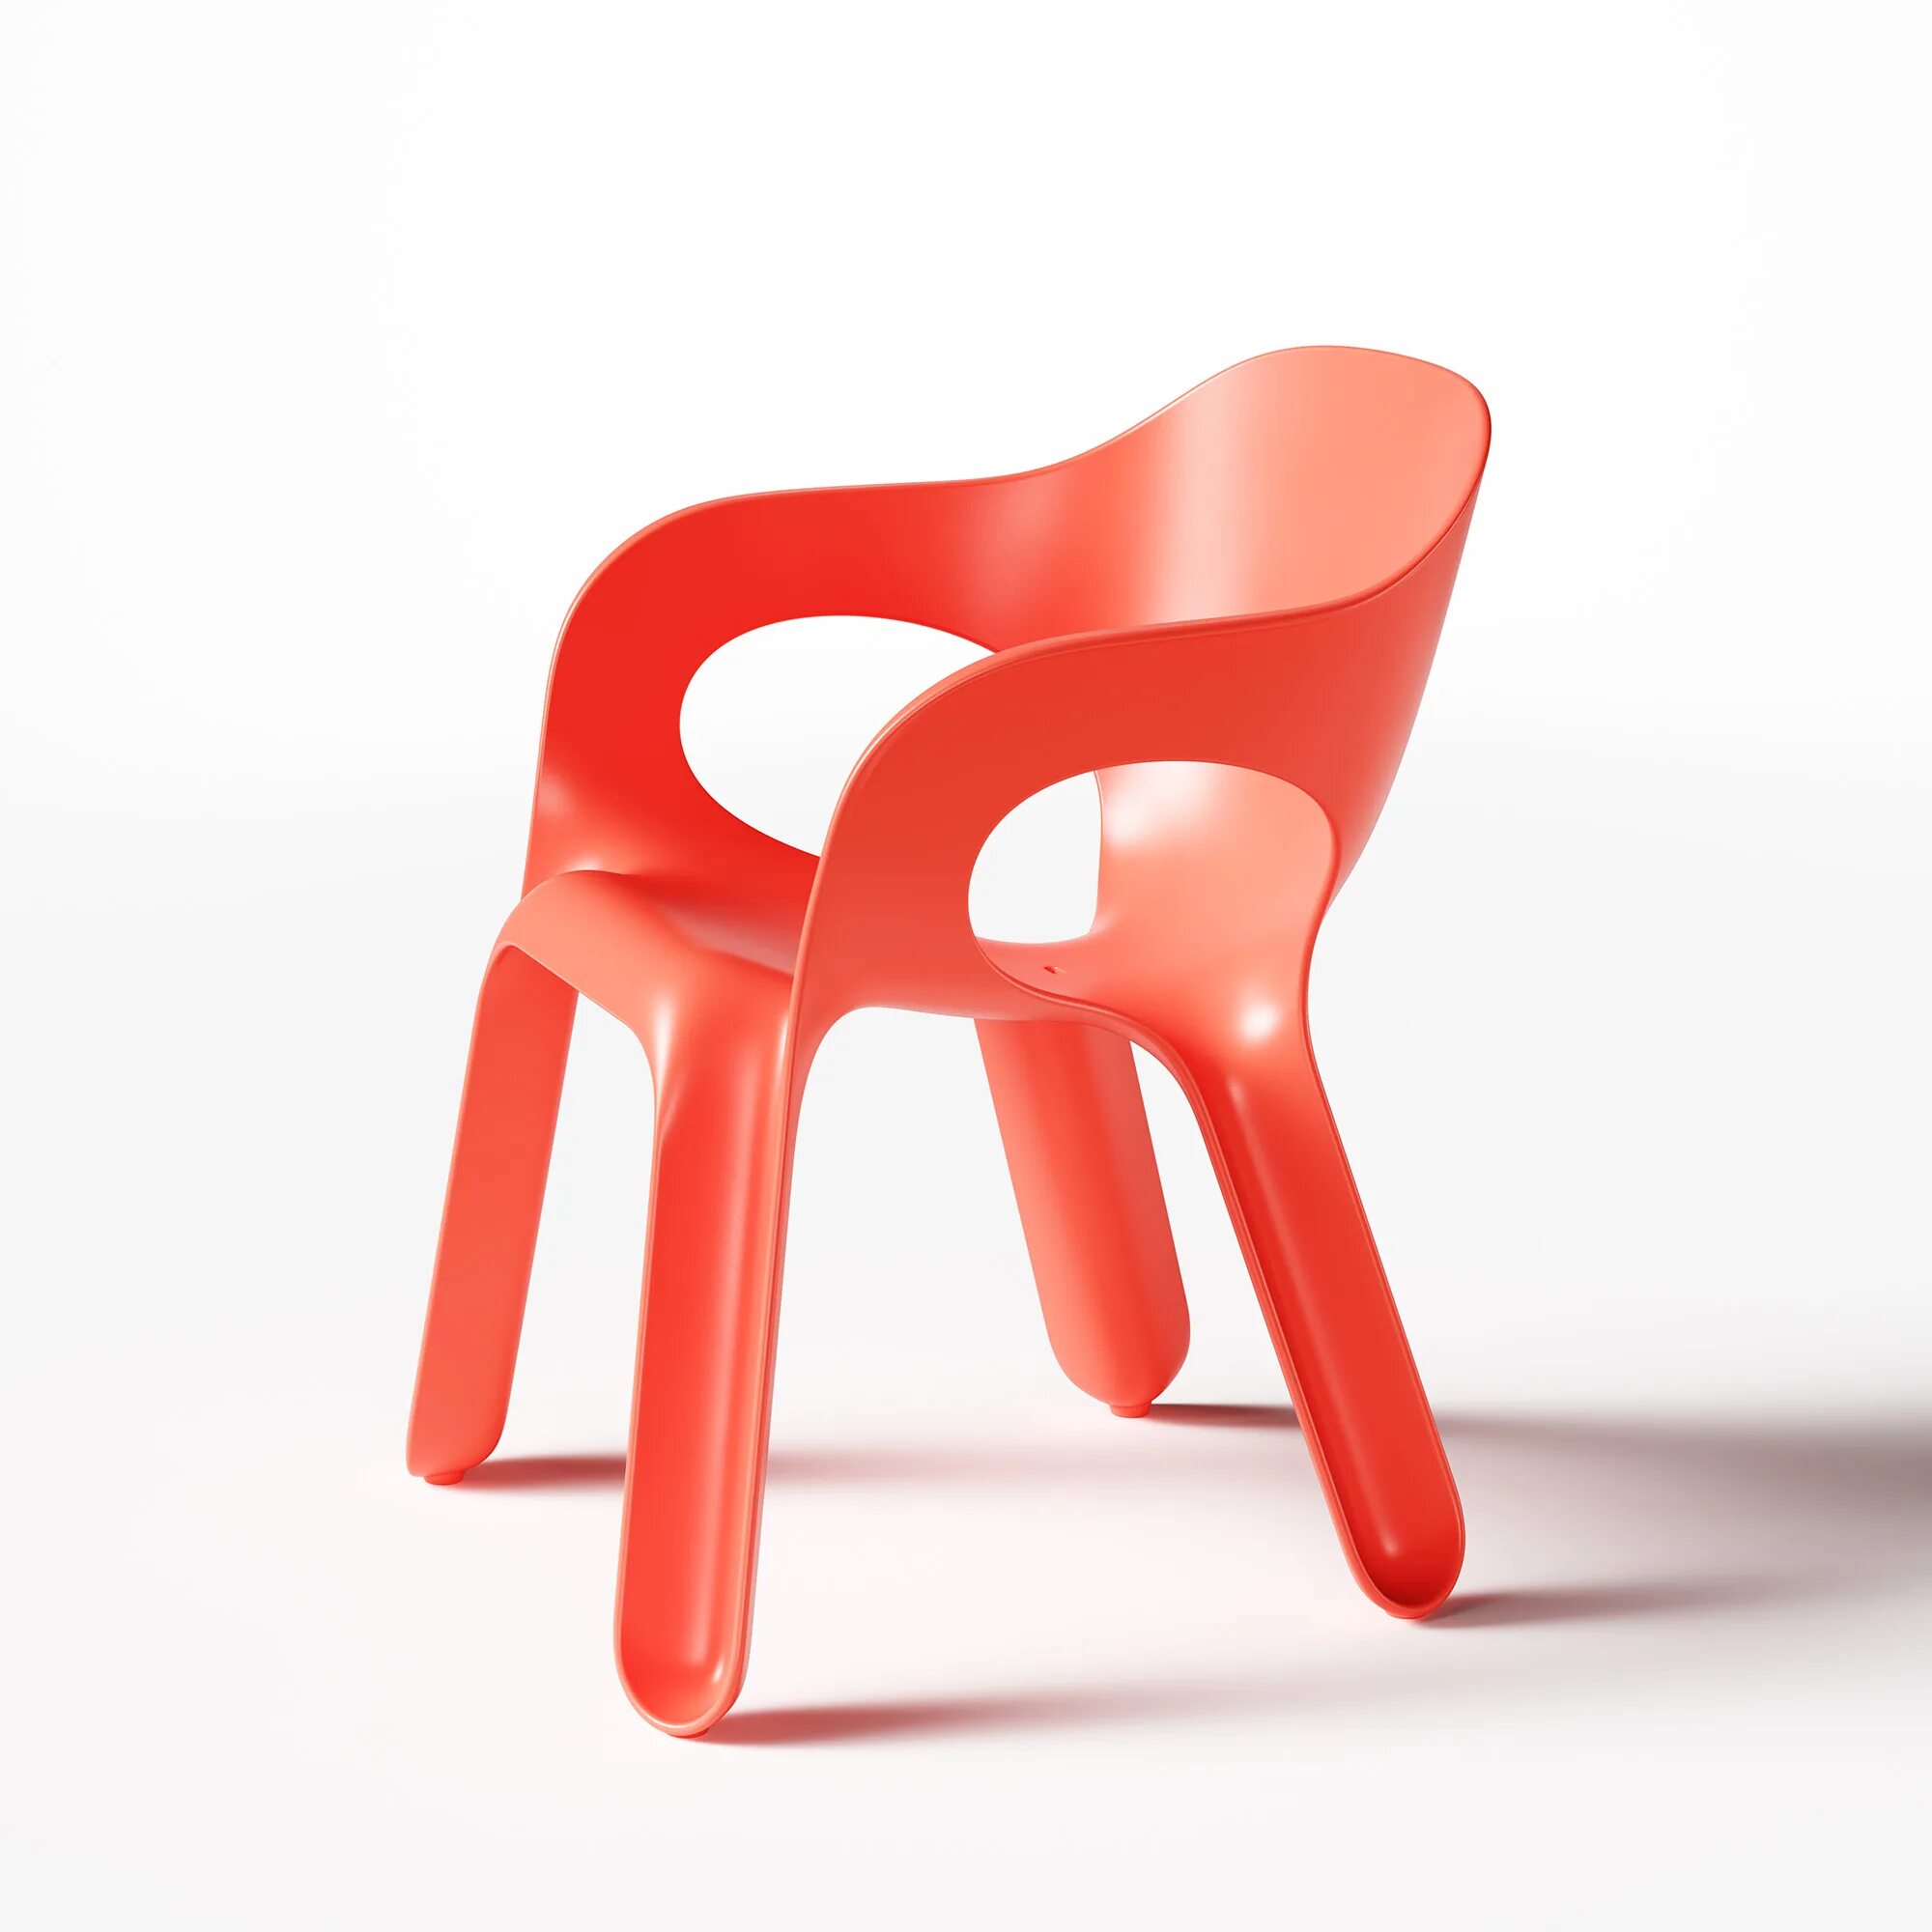 Стул easy. Стул magis Design Bell Chair. Chair magis стул. Стул easy Chair. Tinkercad стул.